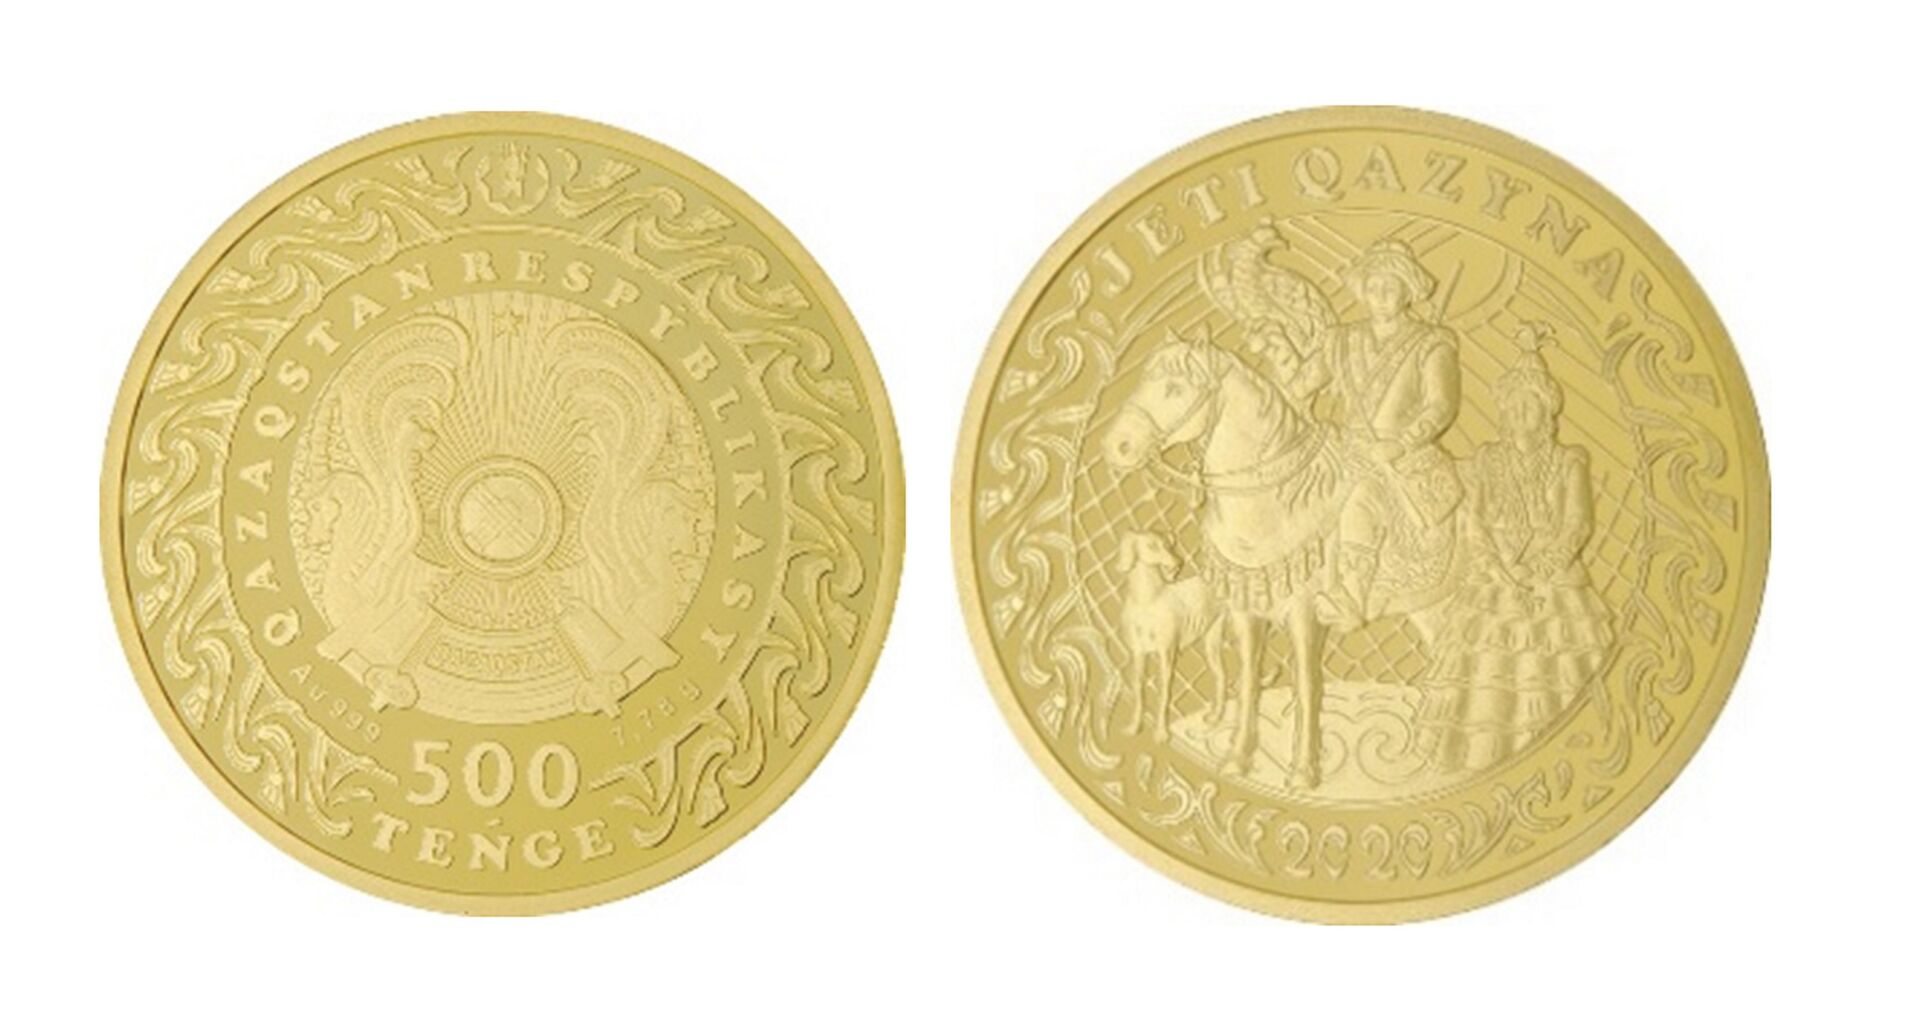 Нацбанк начал продажу коллекционных монет JETI QAZYNA - Sputnik Казахстан, 1920, 19.03.2021